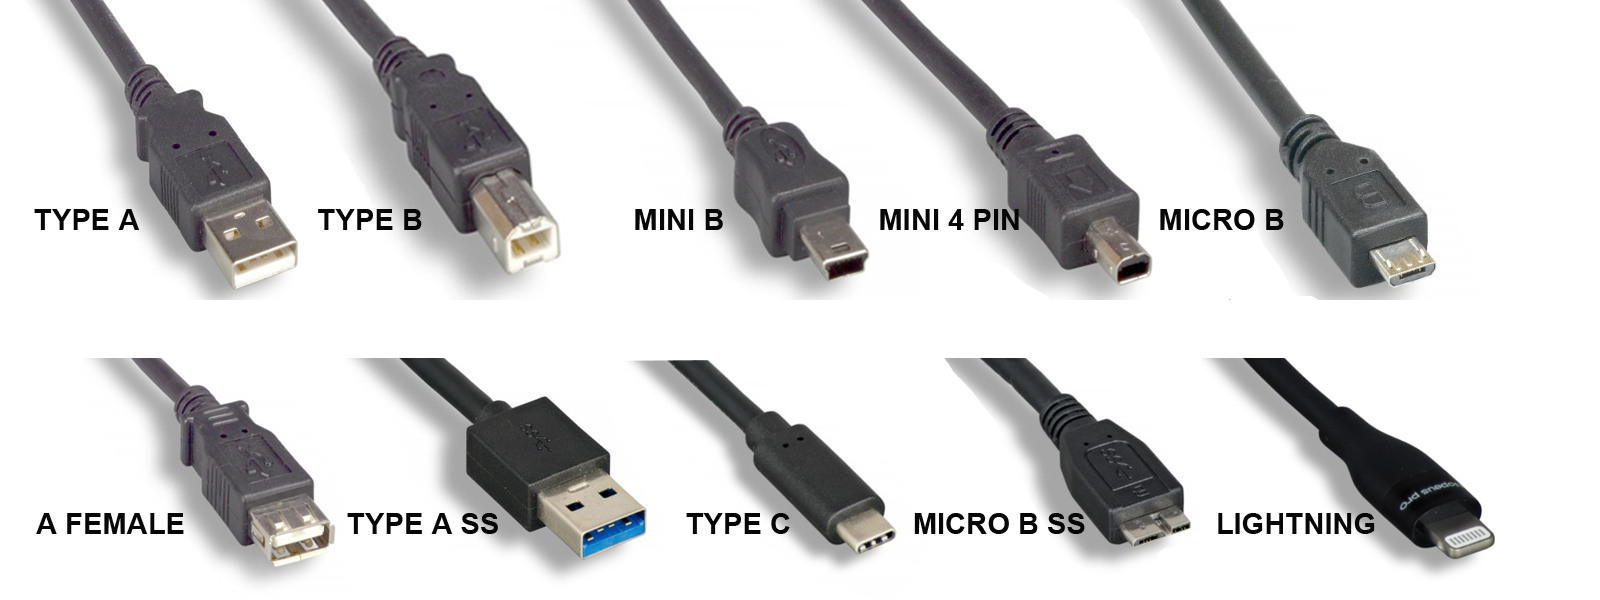 Afstoting kool Sluimeren USB Cable Assemblies | Technical Cable Applications